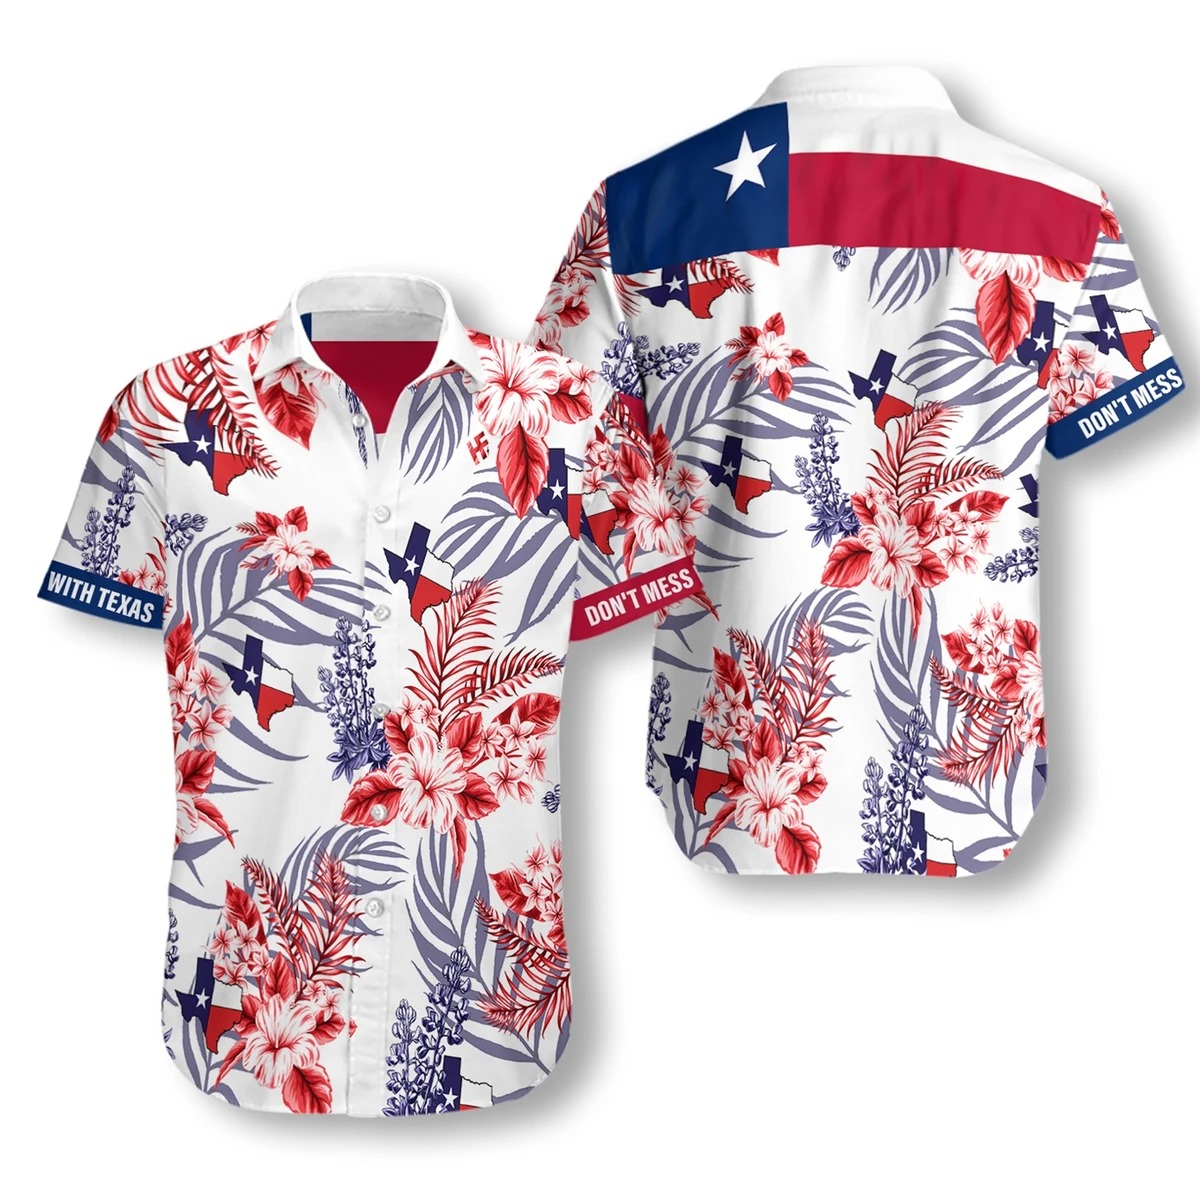 Dont mess with texas hawaiian shirt3